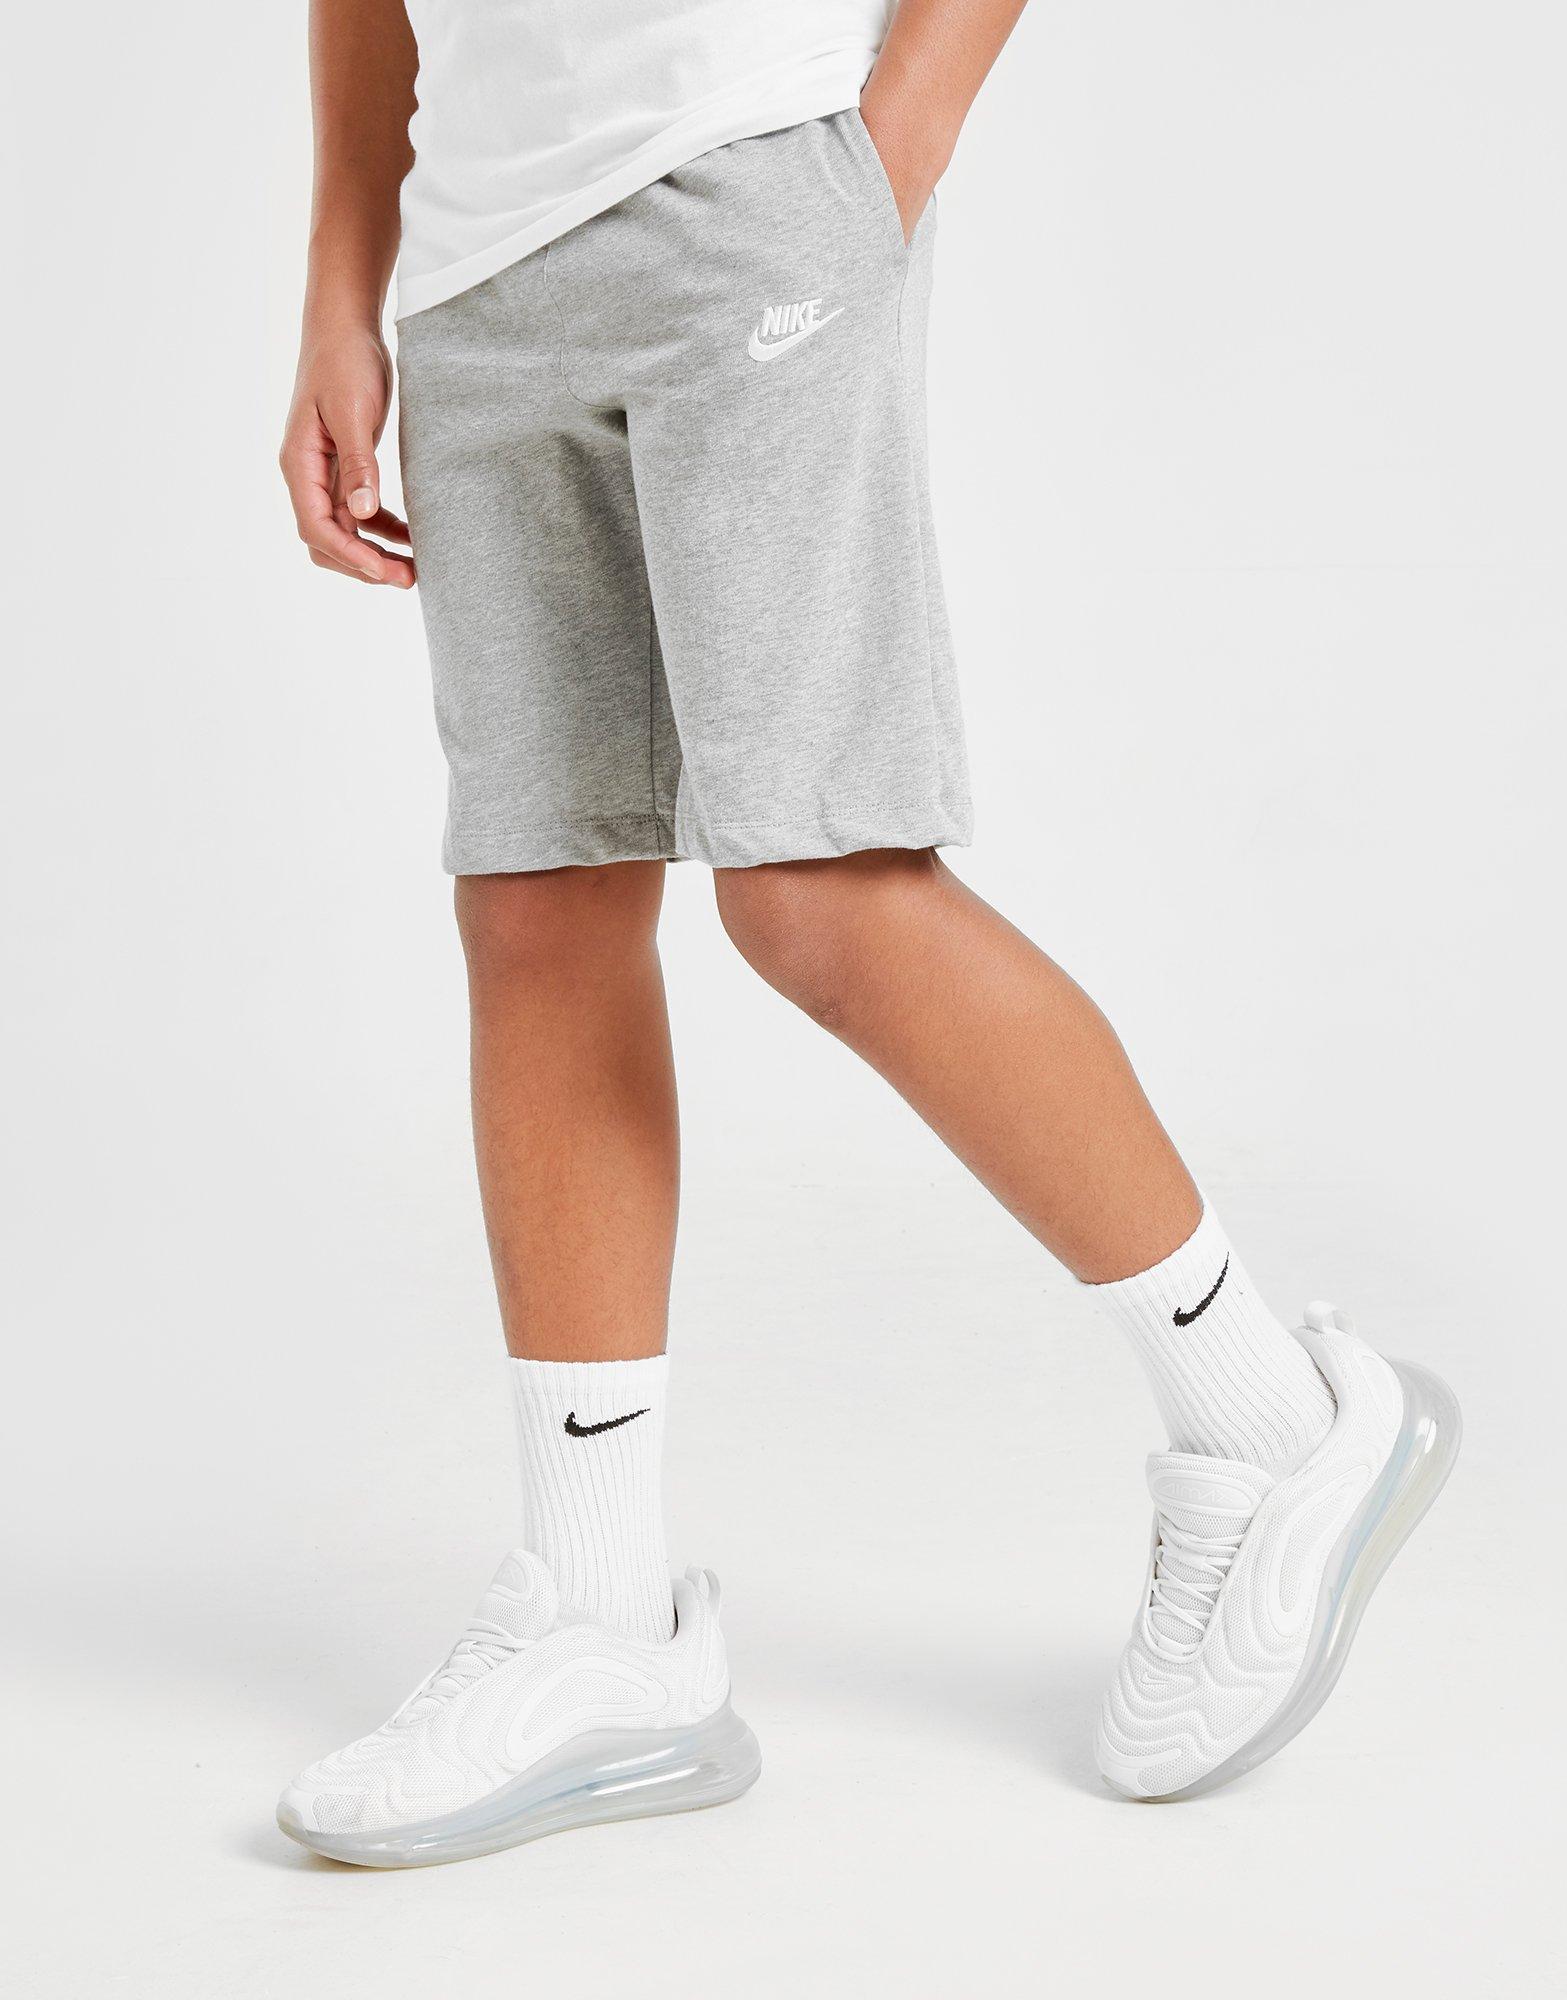 white nike shorts junior